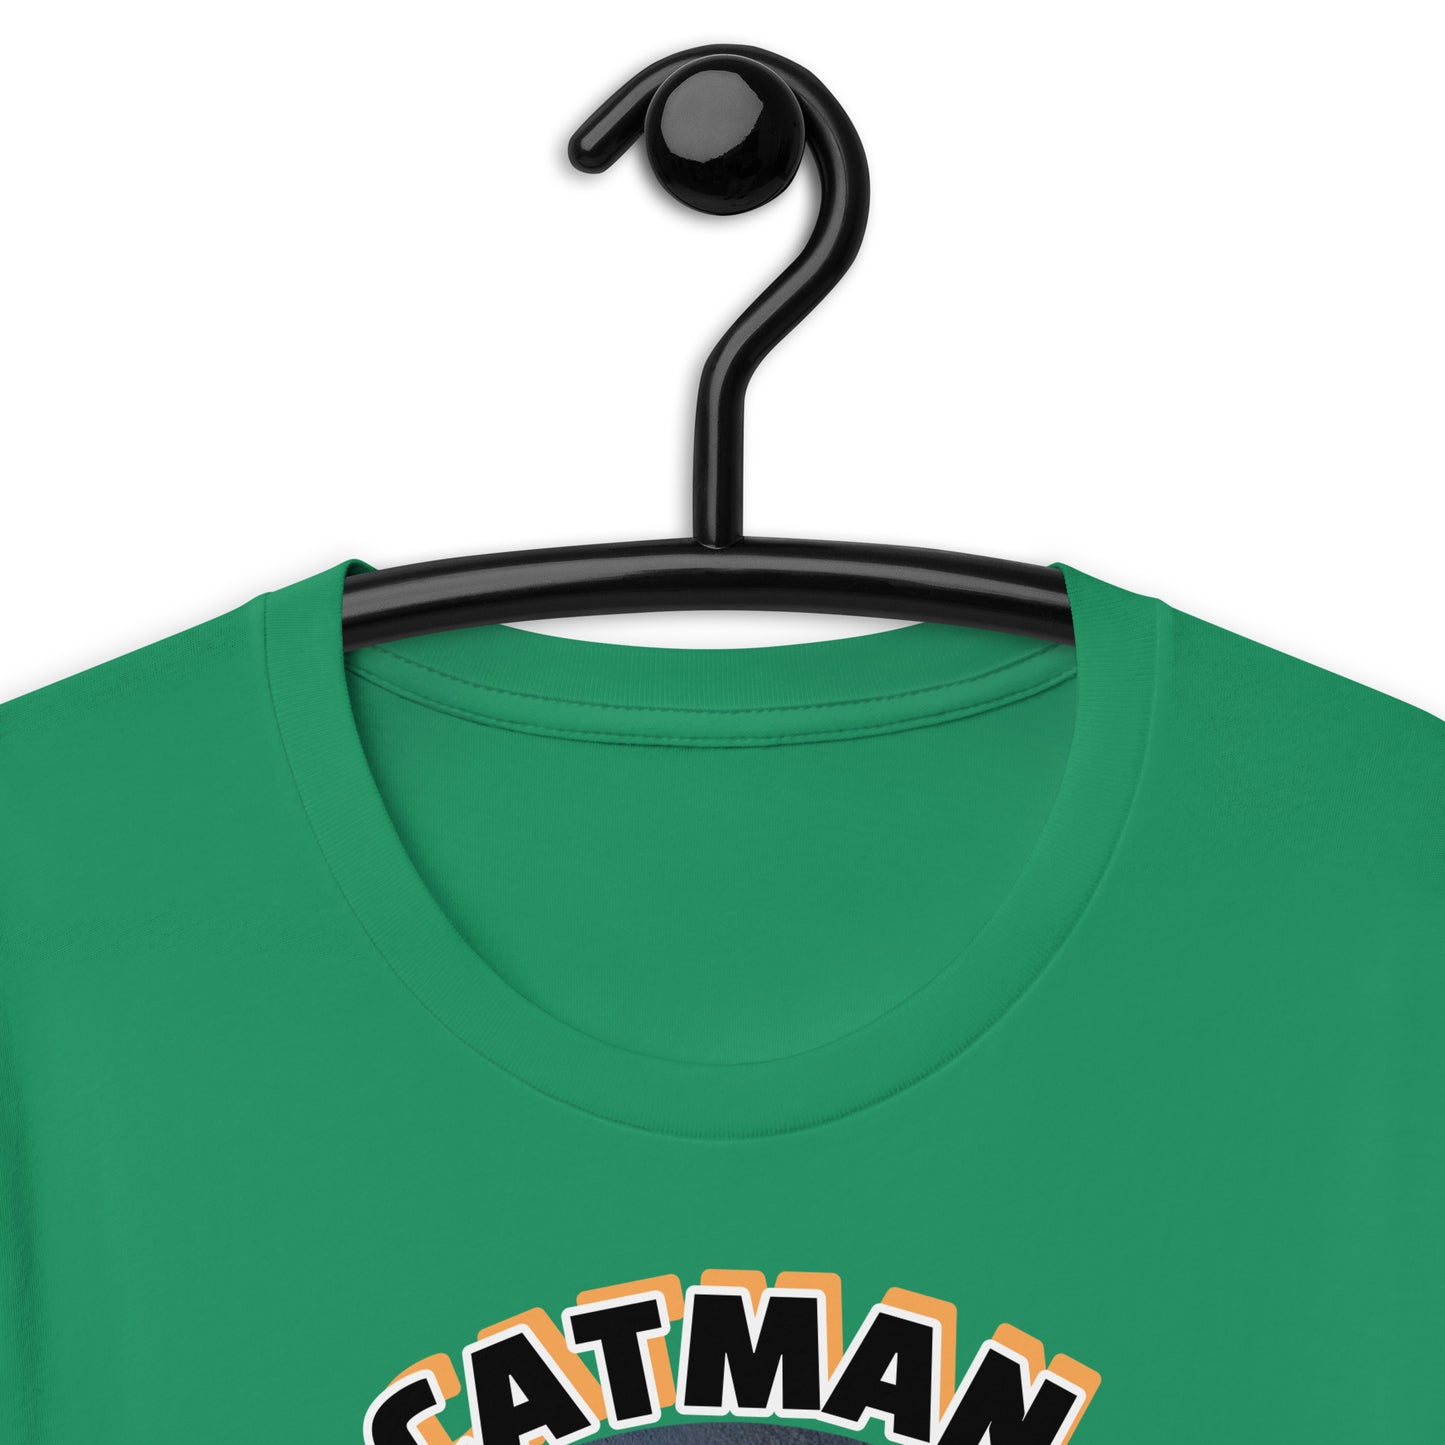 The Catman Shirt